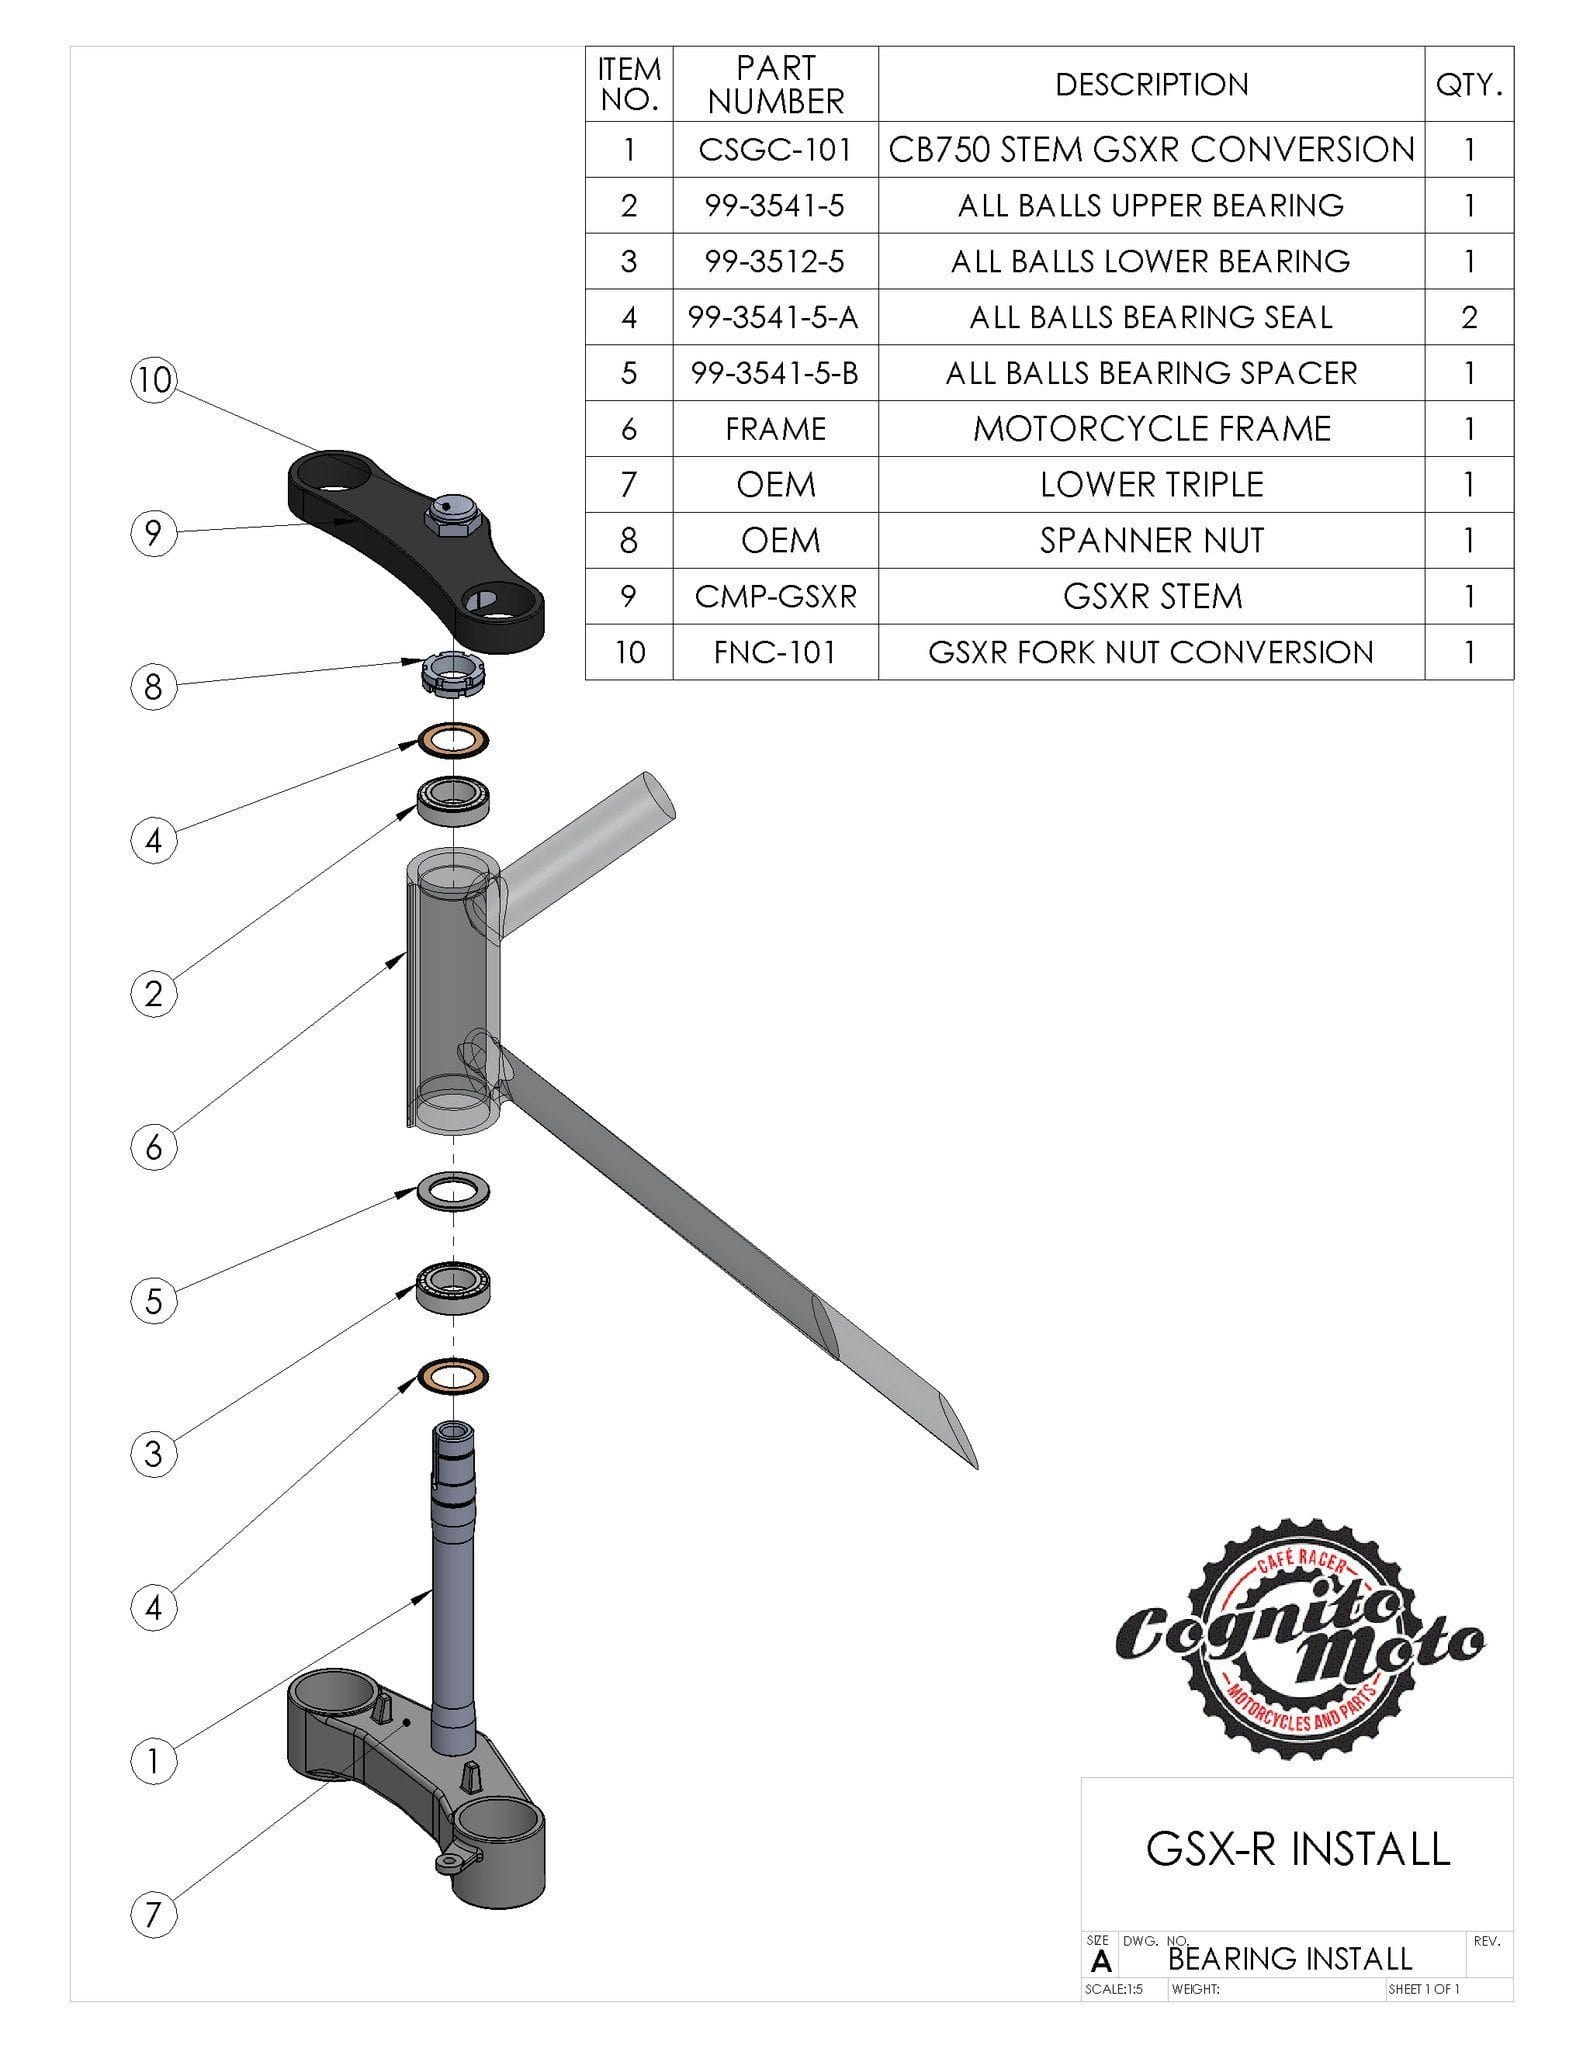 GSX-R Fork on CB650 Conversion Bearings - Cognito Moto